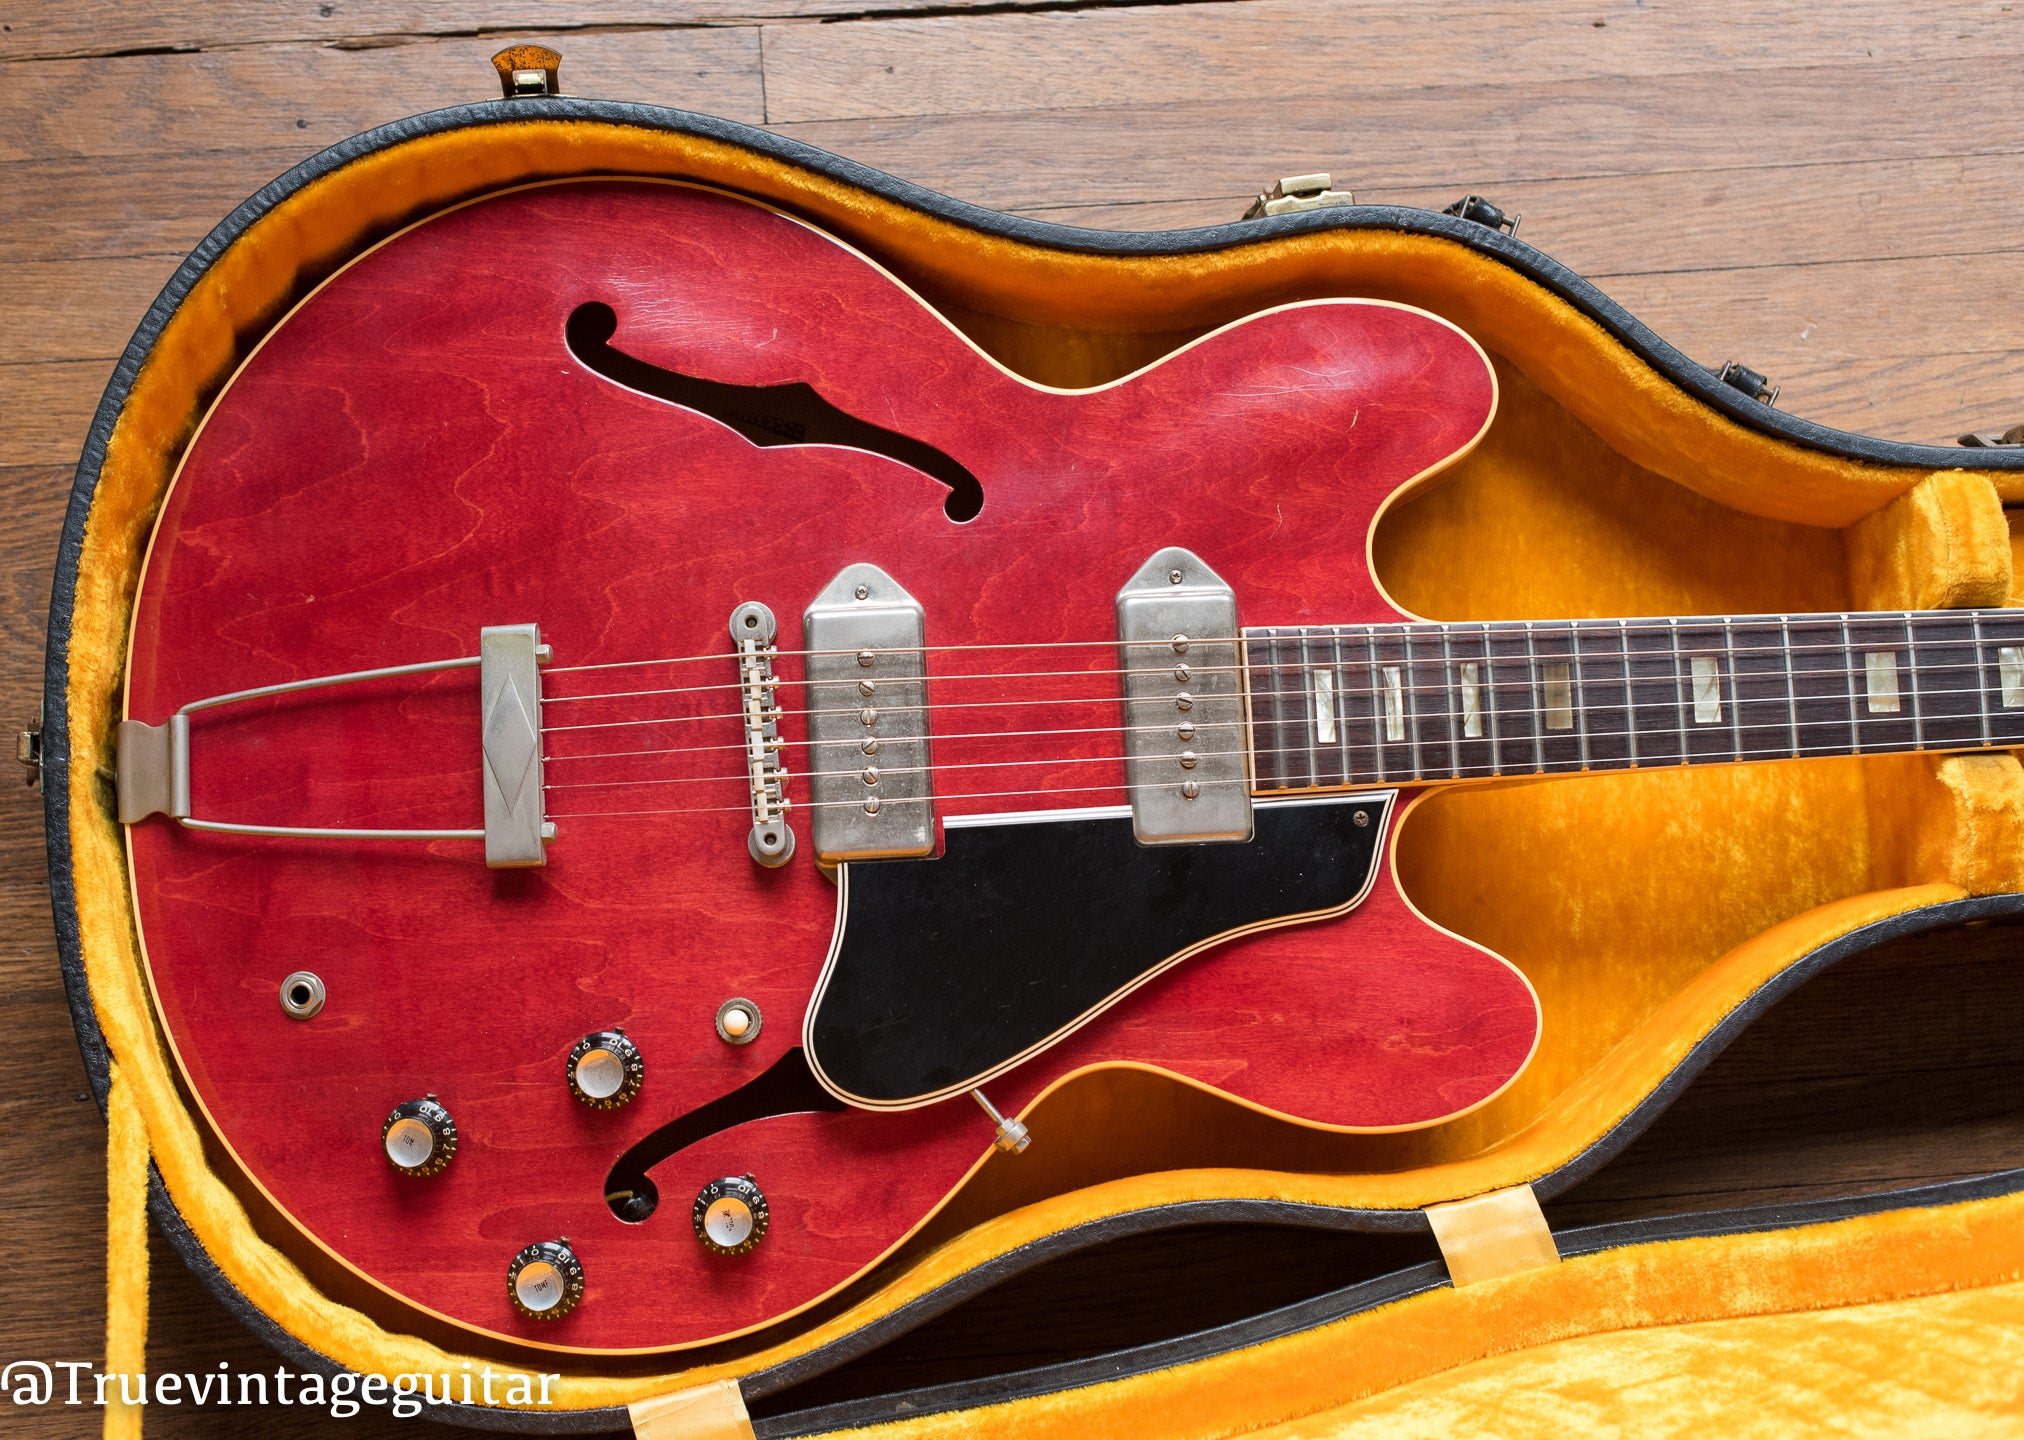 Vintage 1963 Gibson ES-330 guitar